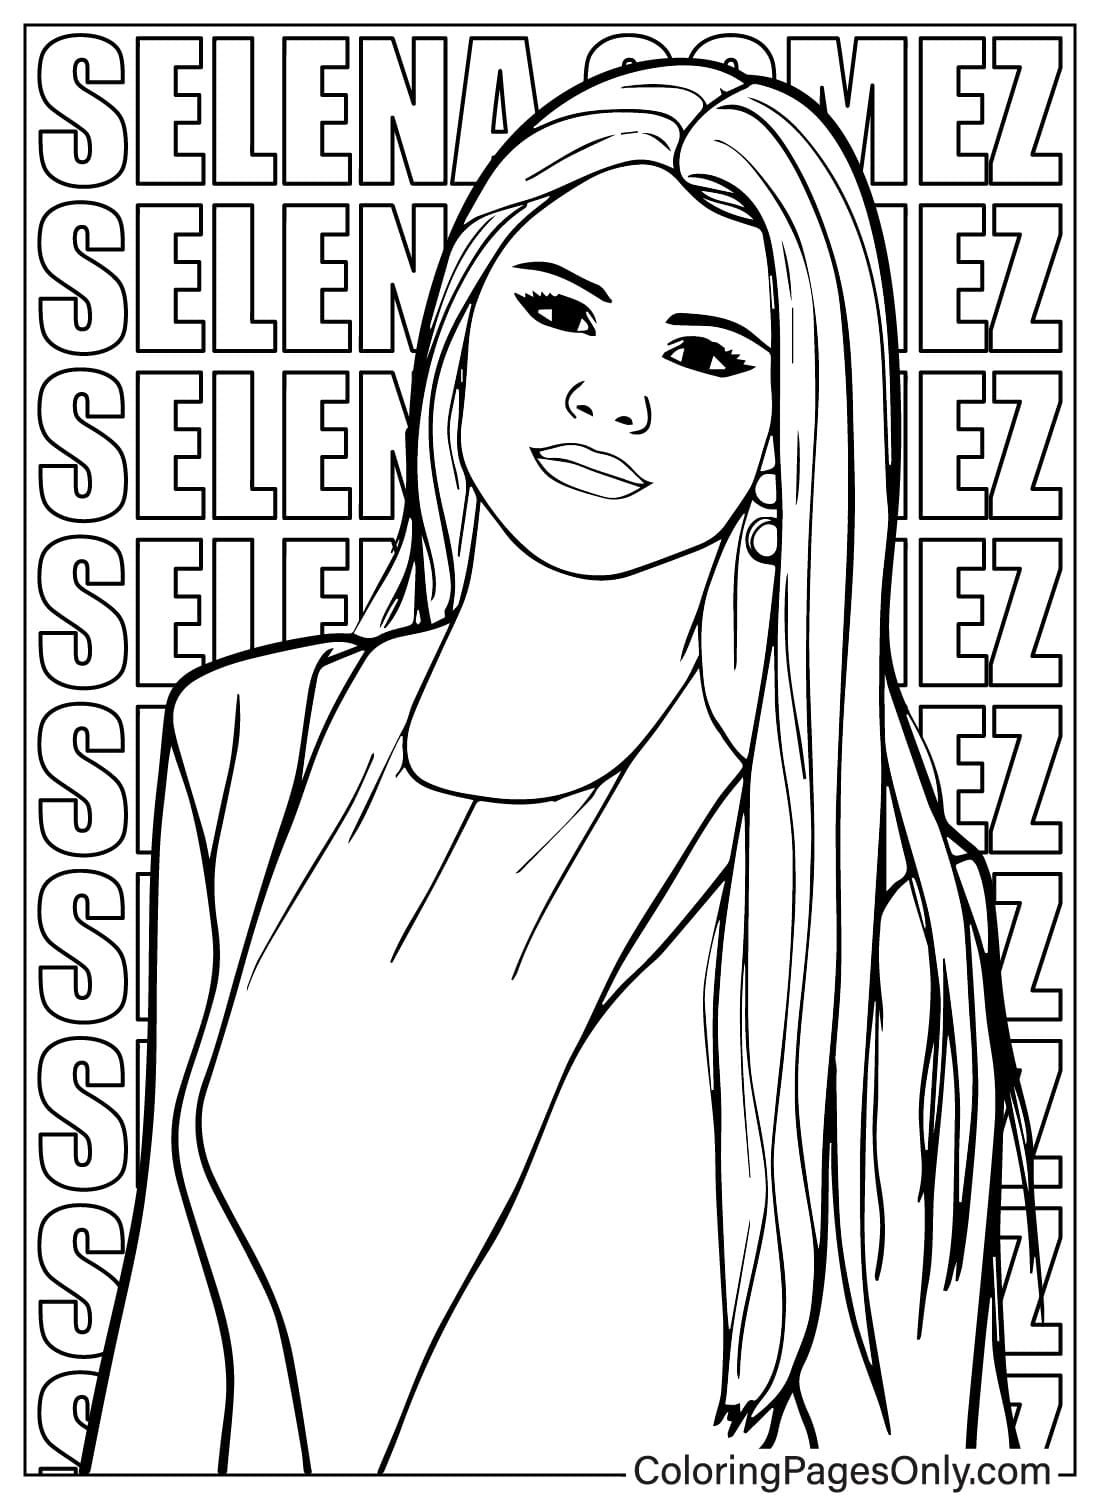 赛琳娜·戈麦斯 (Selena Gomez) 着色页可从赛琳娜·戈麦斯 (Selena Gomez) 打印